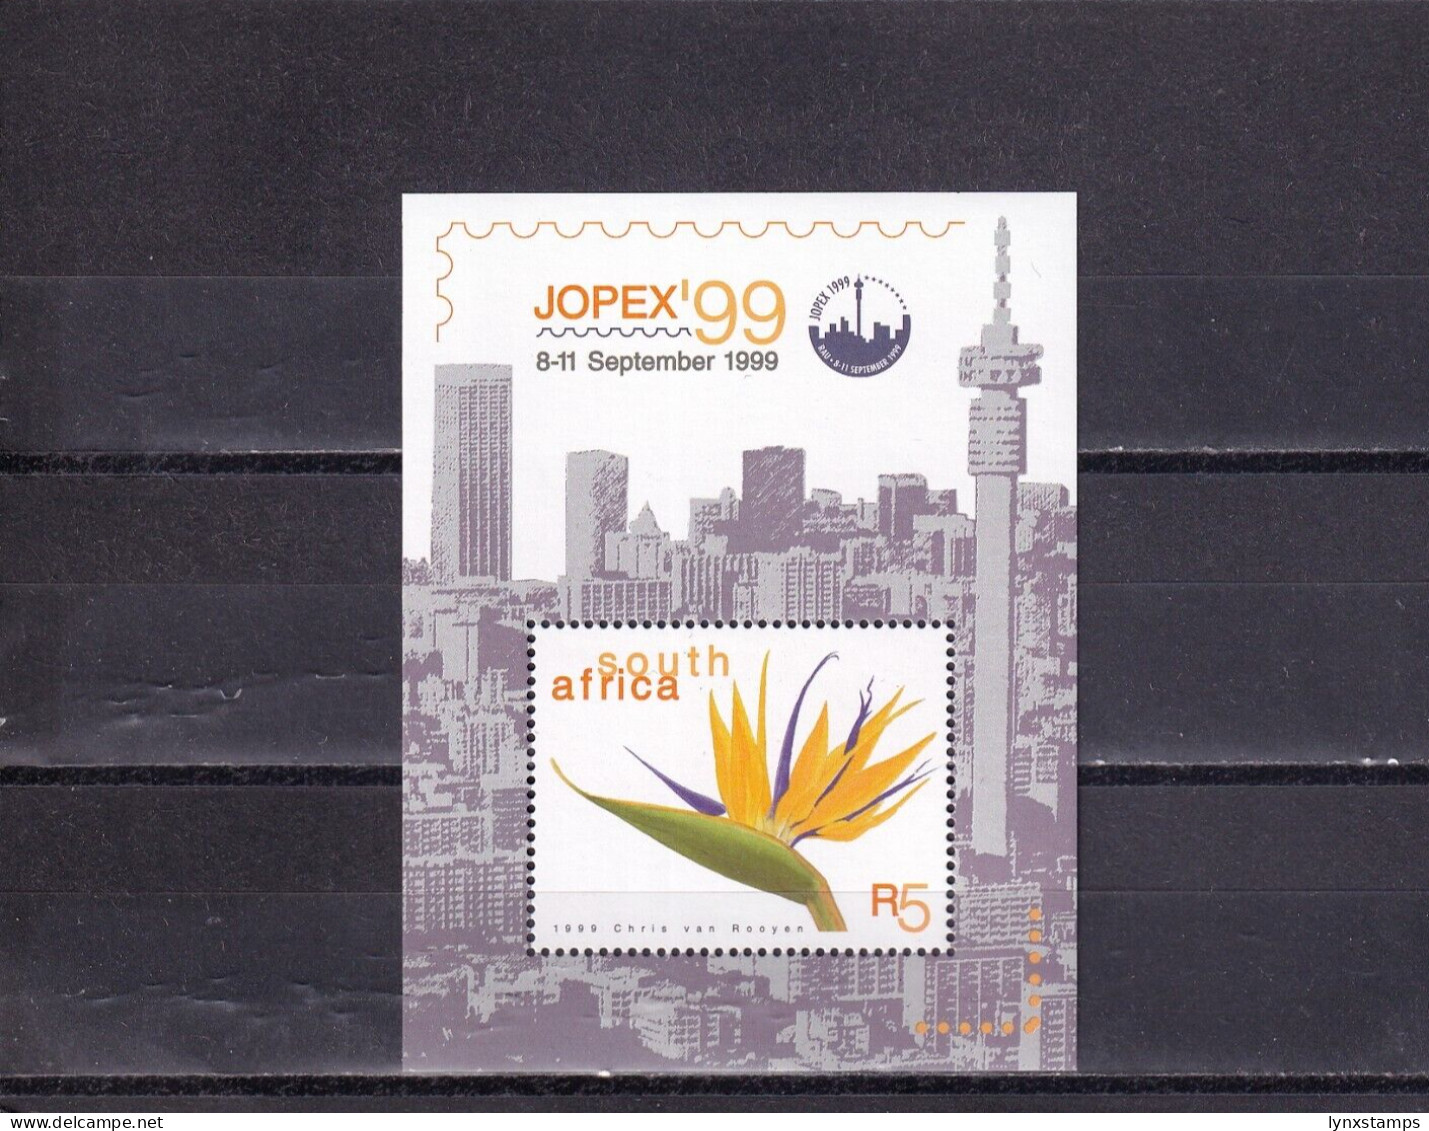 SA05 South Africa 1999 JOPEX '99 National Stamp Exhib. Johannesbur Minisheet - Ongebruikt